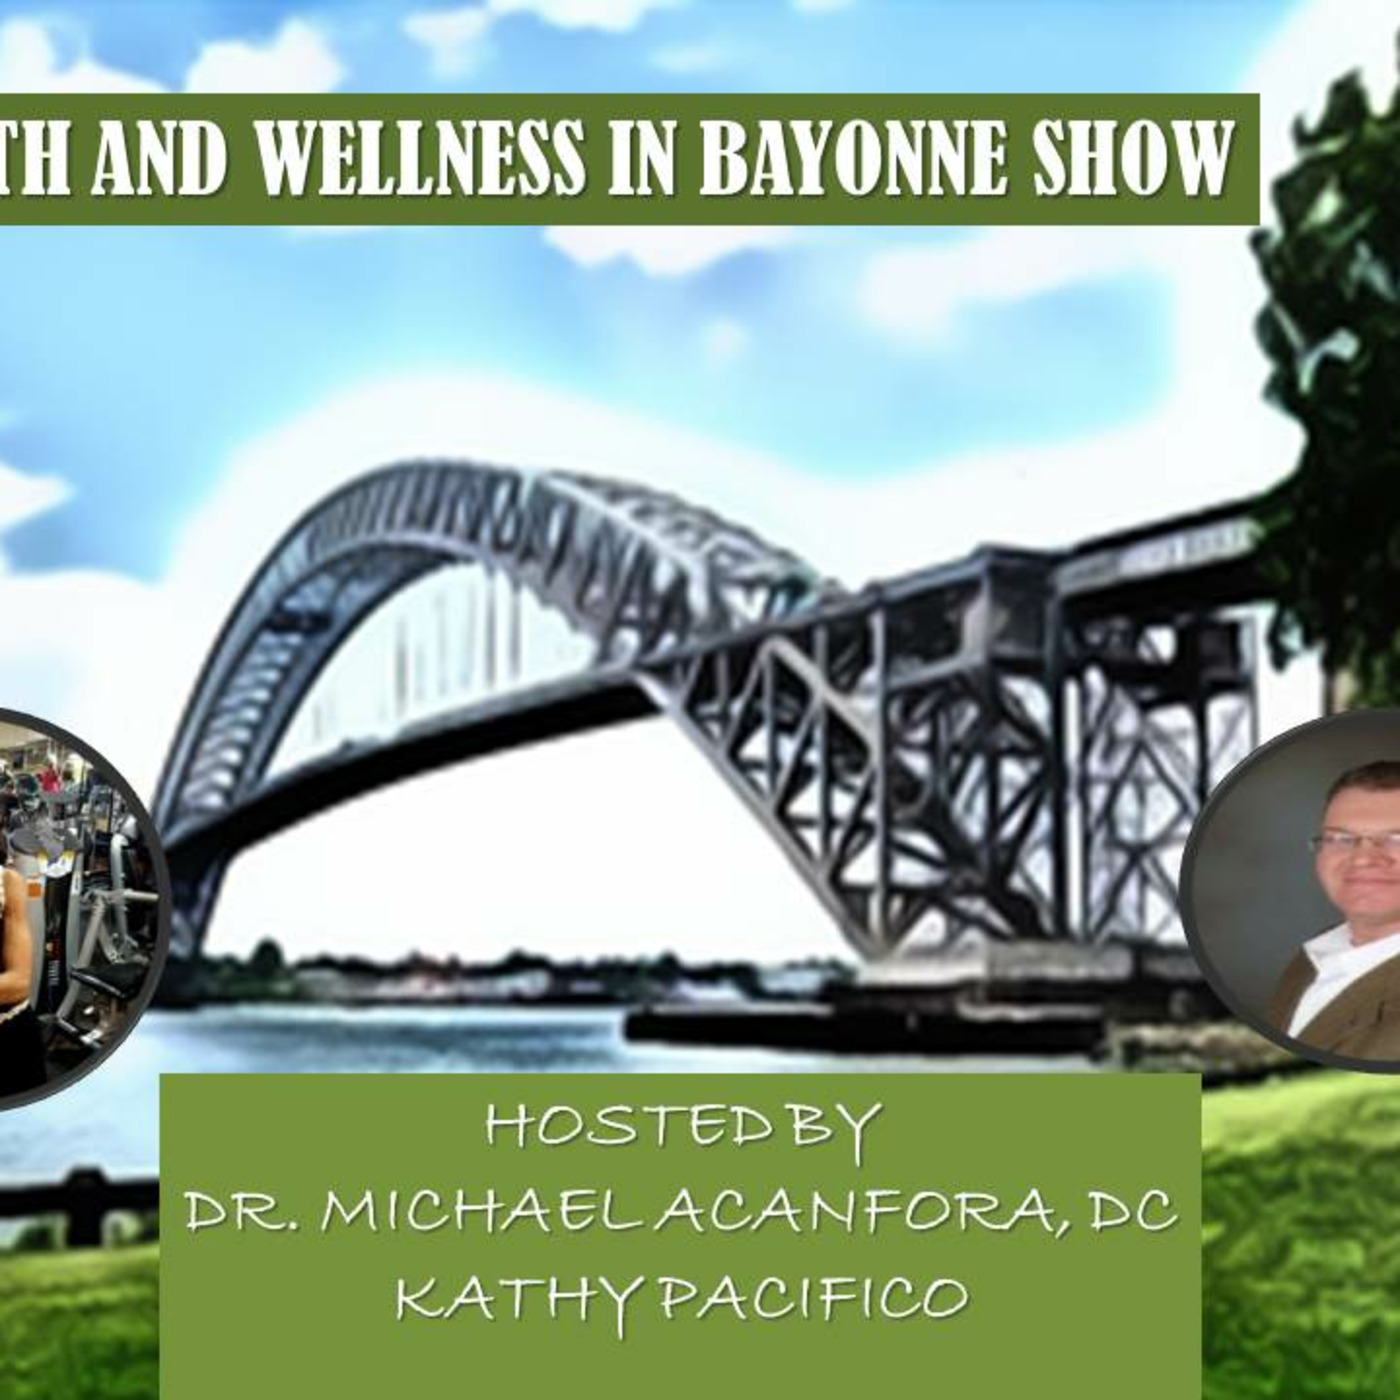 The Health & Wellness in Bayonne Show